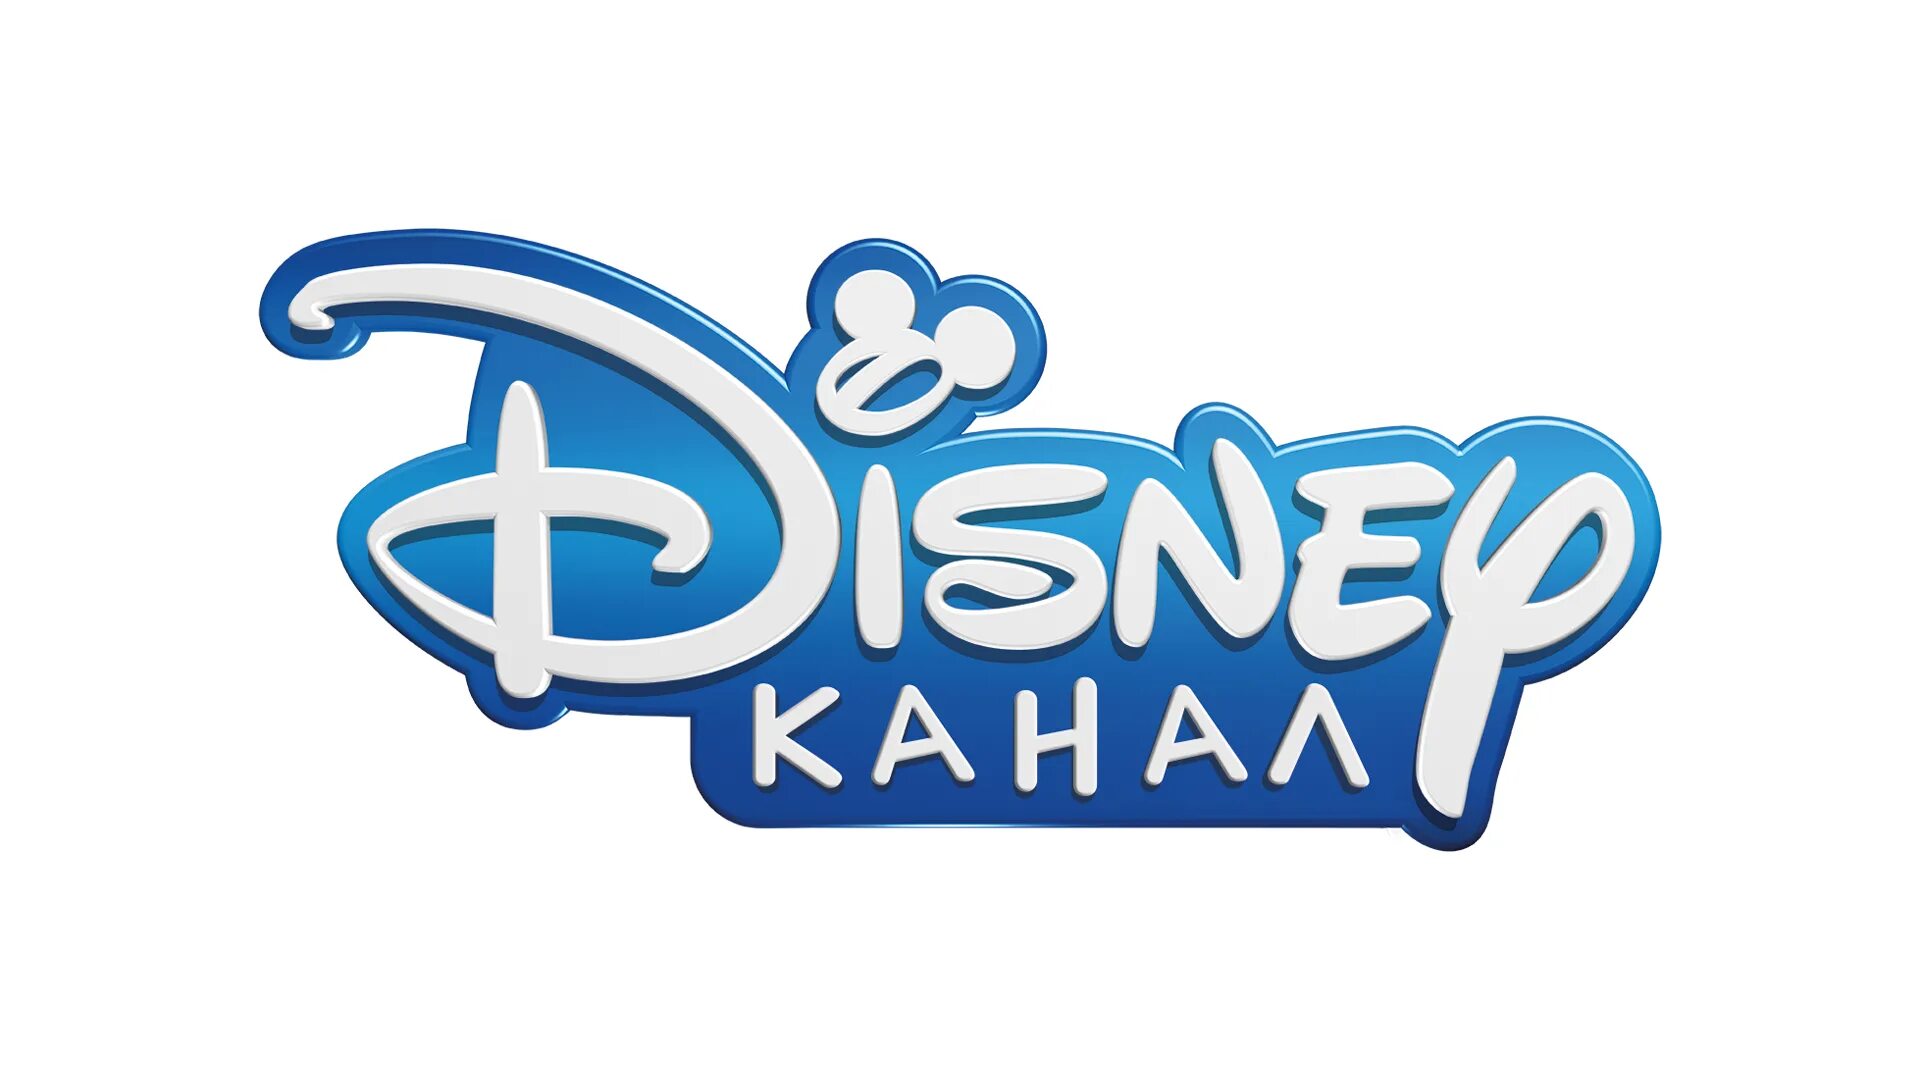 Канал 10 0 1. Канал Disney Россия логотип. Disney канал логотип 2011. Эмблема канала Дисней. Дисней Телеканал логотип.